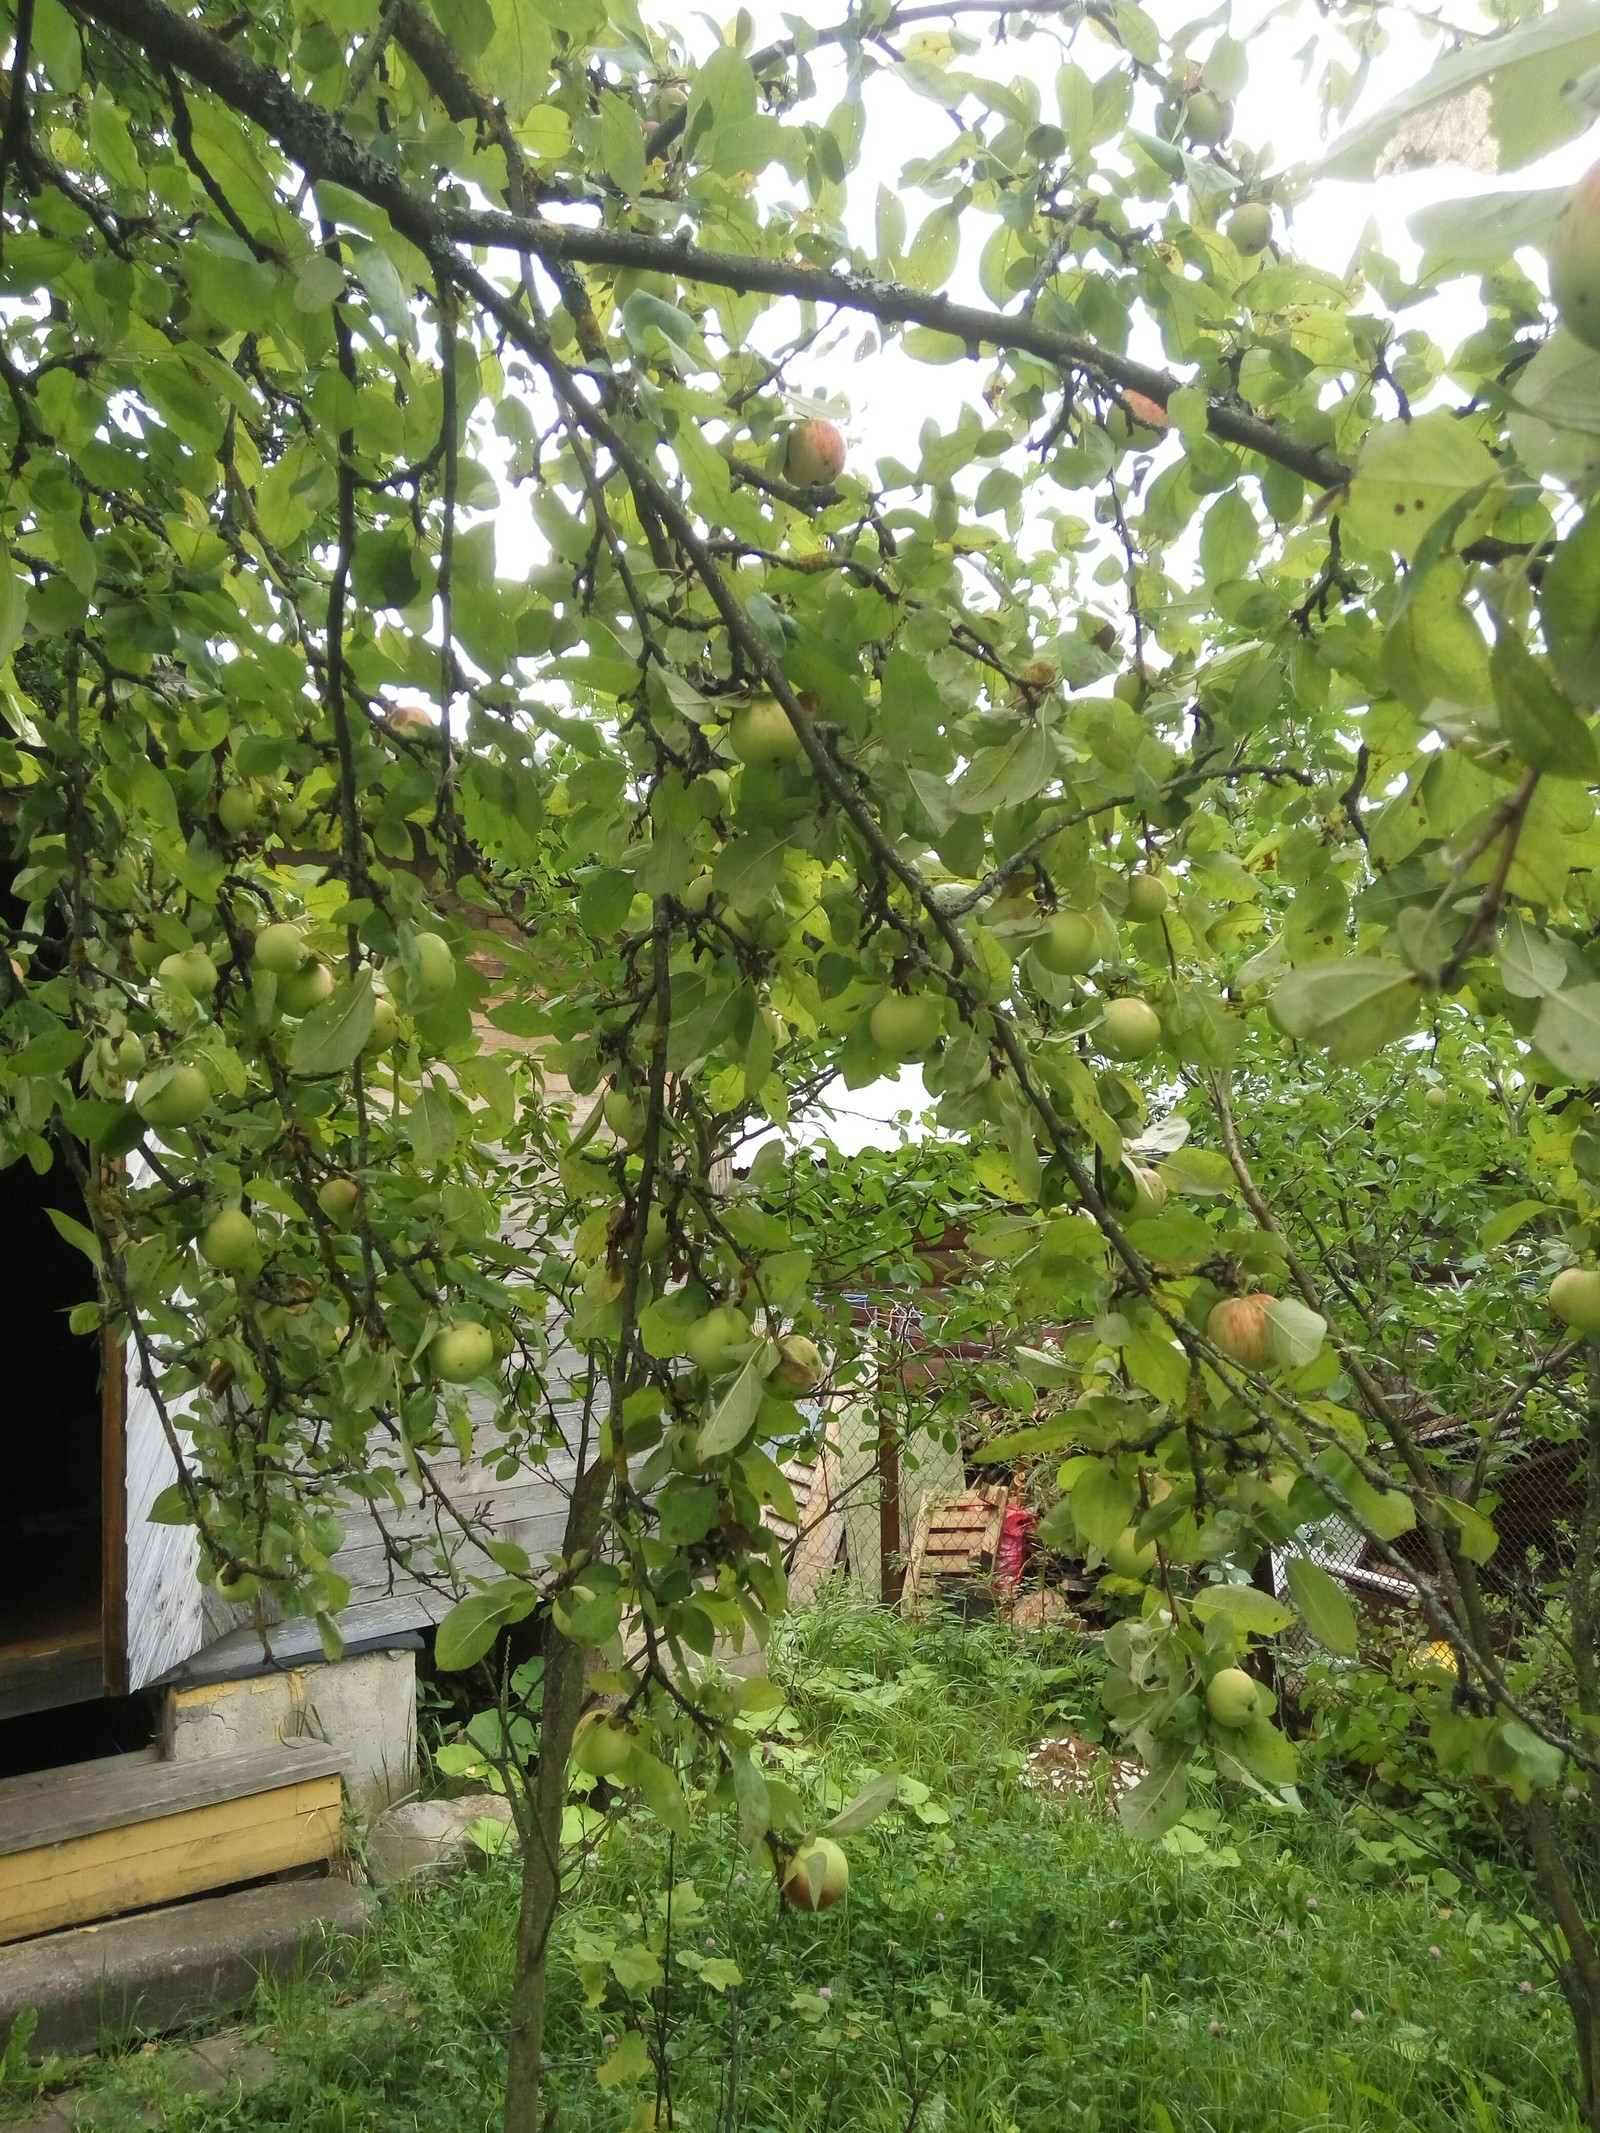 Harvest free, pickup - My, Dacha, Apples, For free, Longpost, Is free